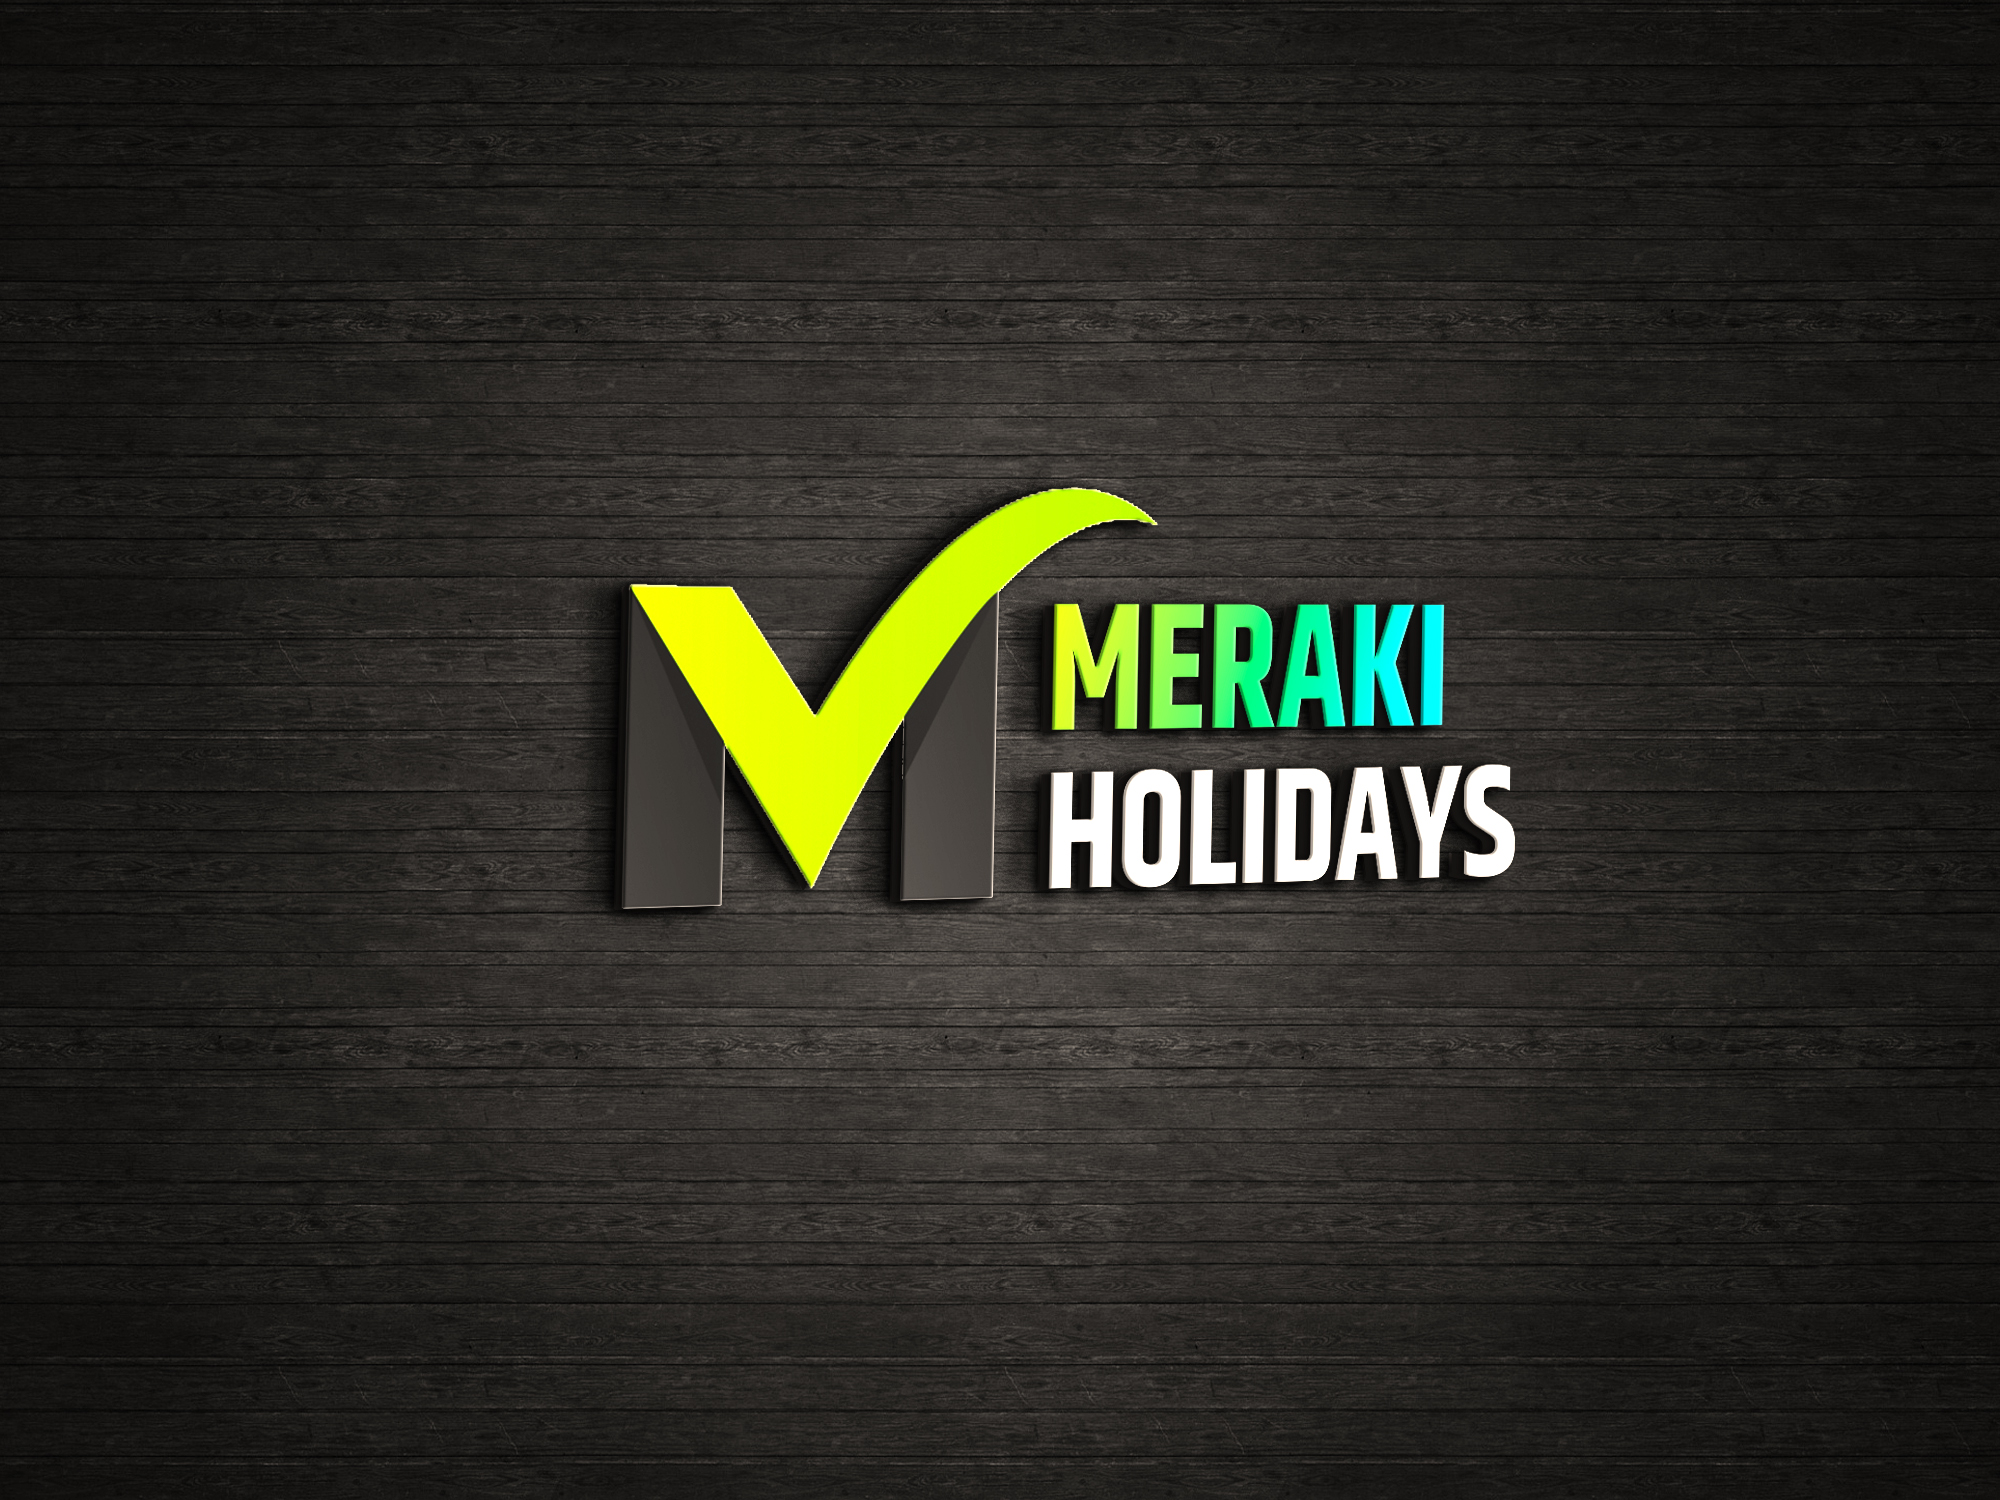 Meraki Holidays